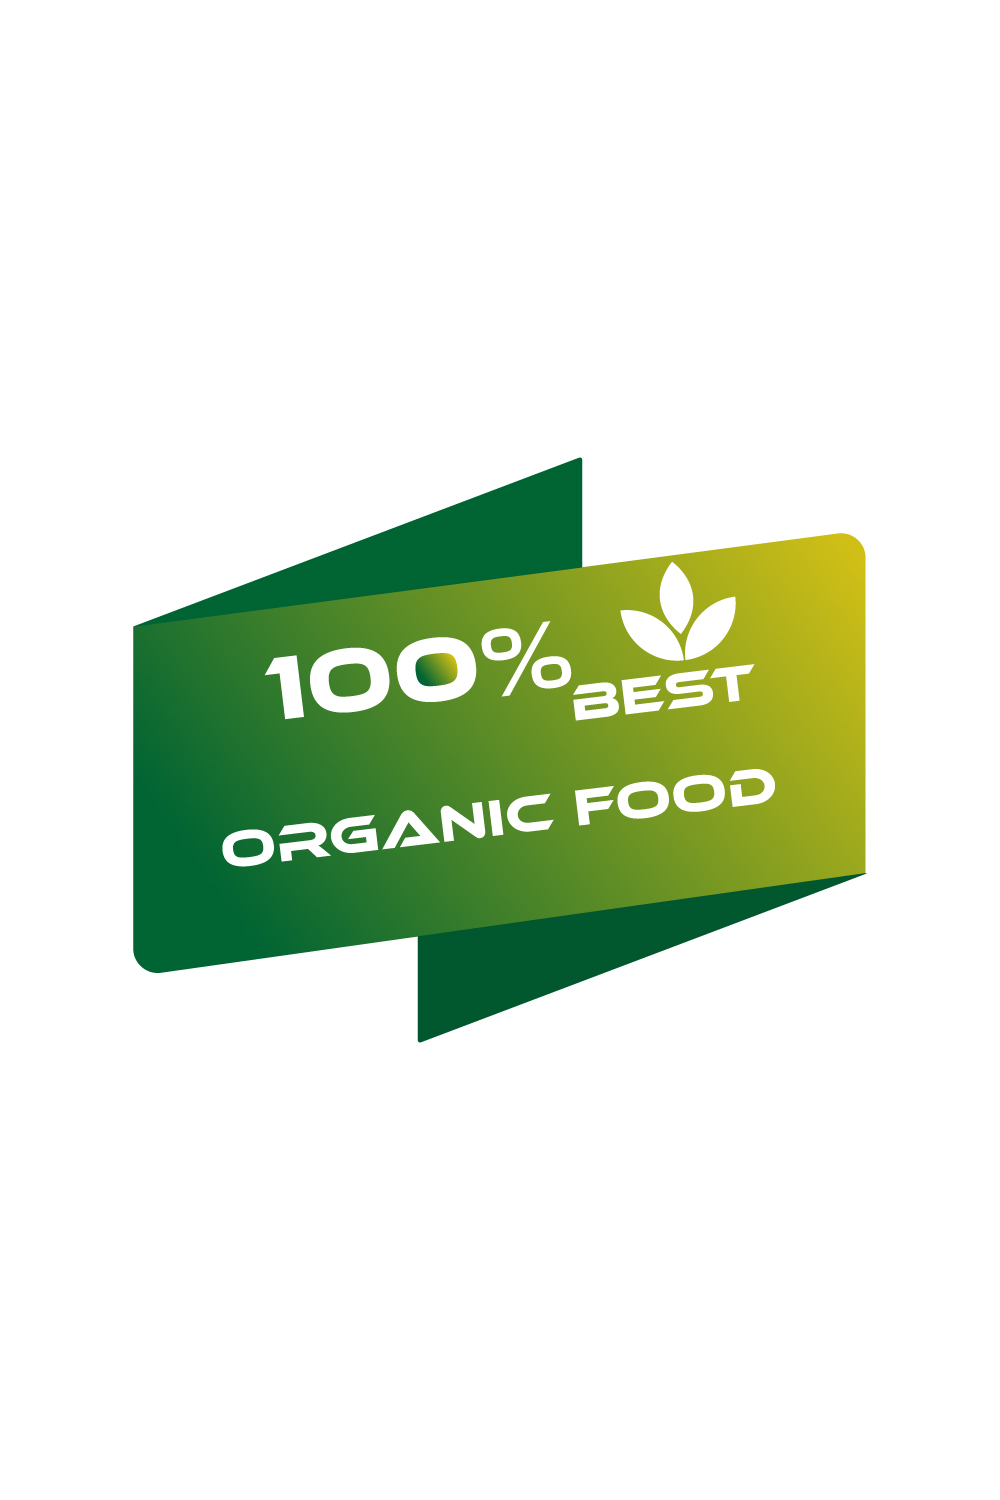 professional Organic food logo design vector images Natural Food logo design, Halal food logo design Green leaf logo icon design Vigan food logo pinterest preview image.